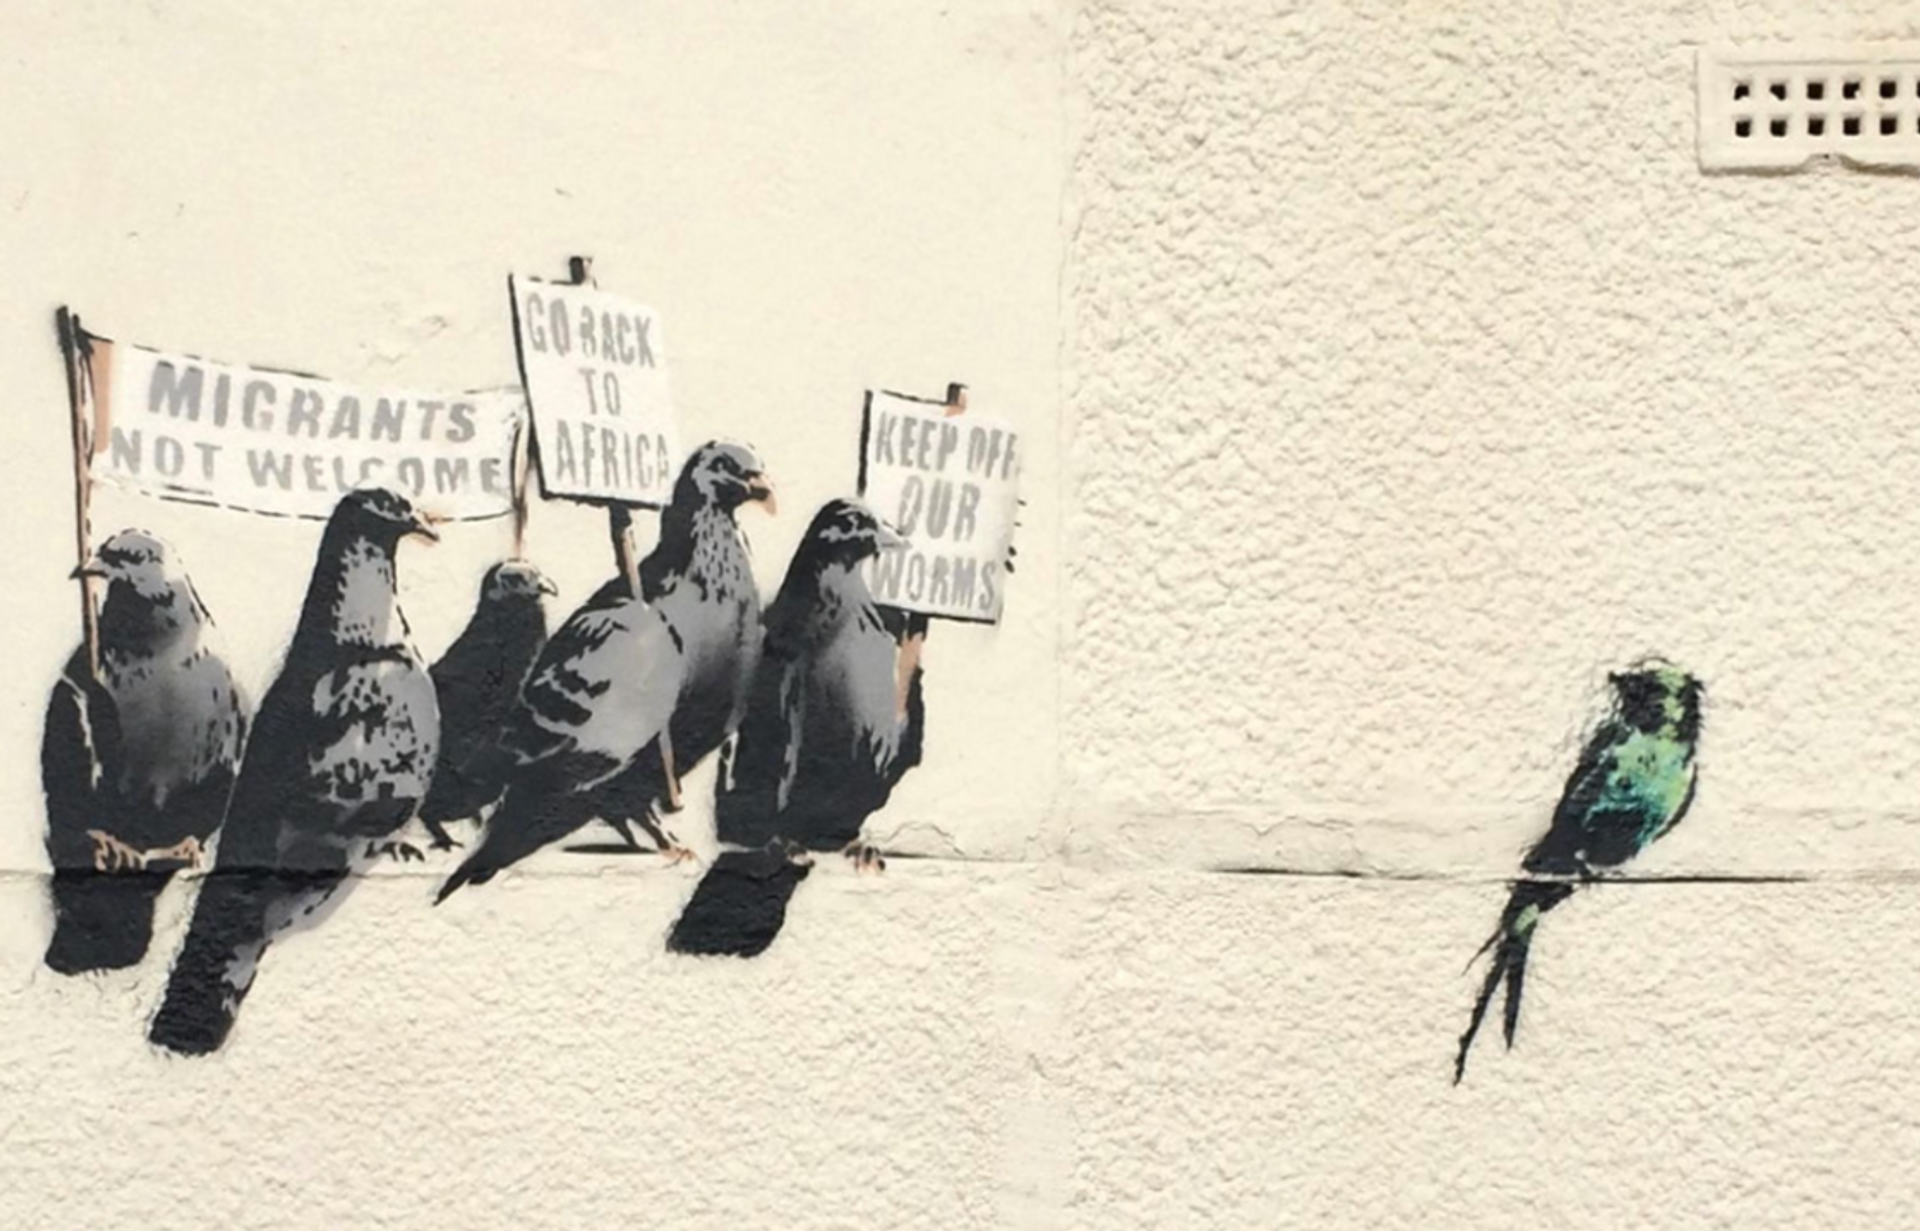 Migrants Not Welcome by Banksy - MyArtBroker